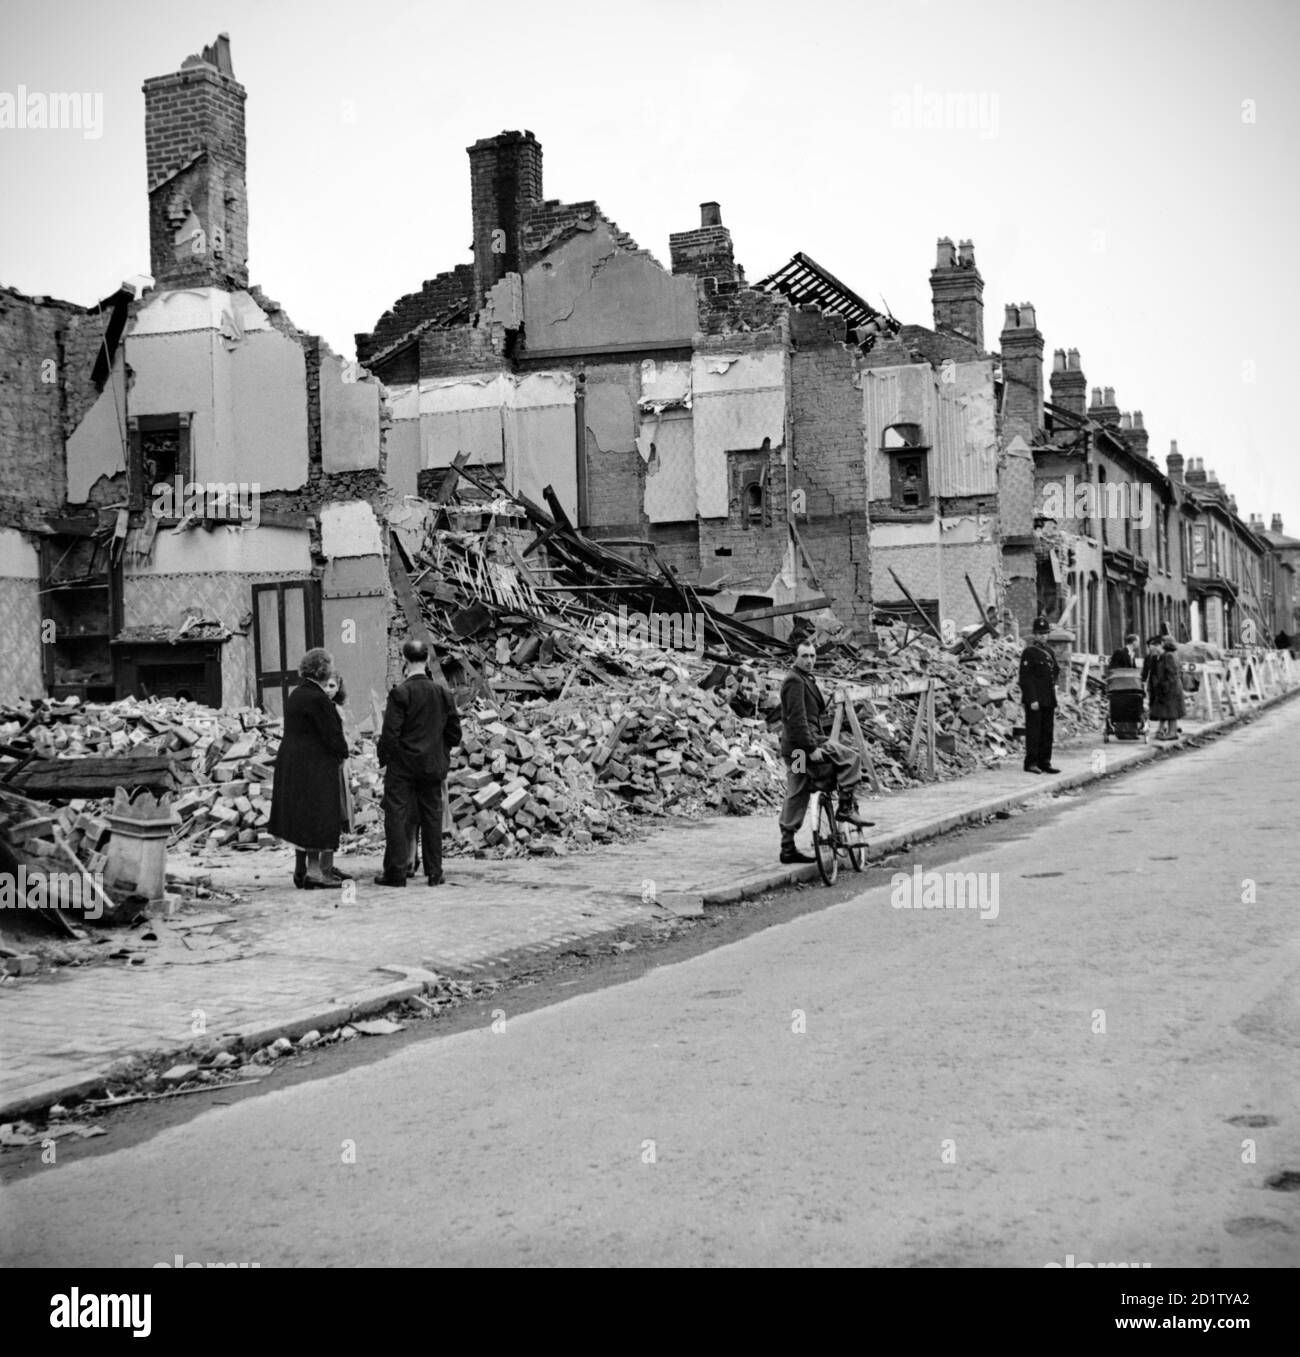 HIGHGATE ROAD, Sparkbrook, Birmingham, West Midlands. Daño a la bomba fotografiado por James Nelson, 29 de julio de 1942. Foto de stock